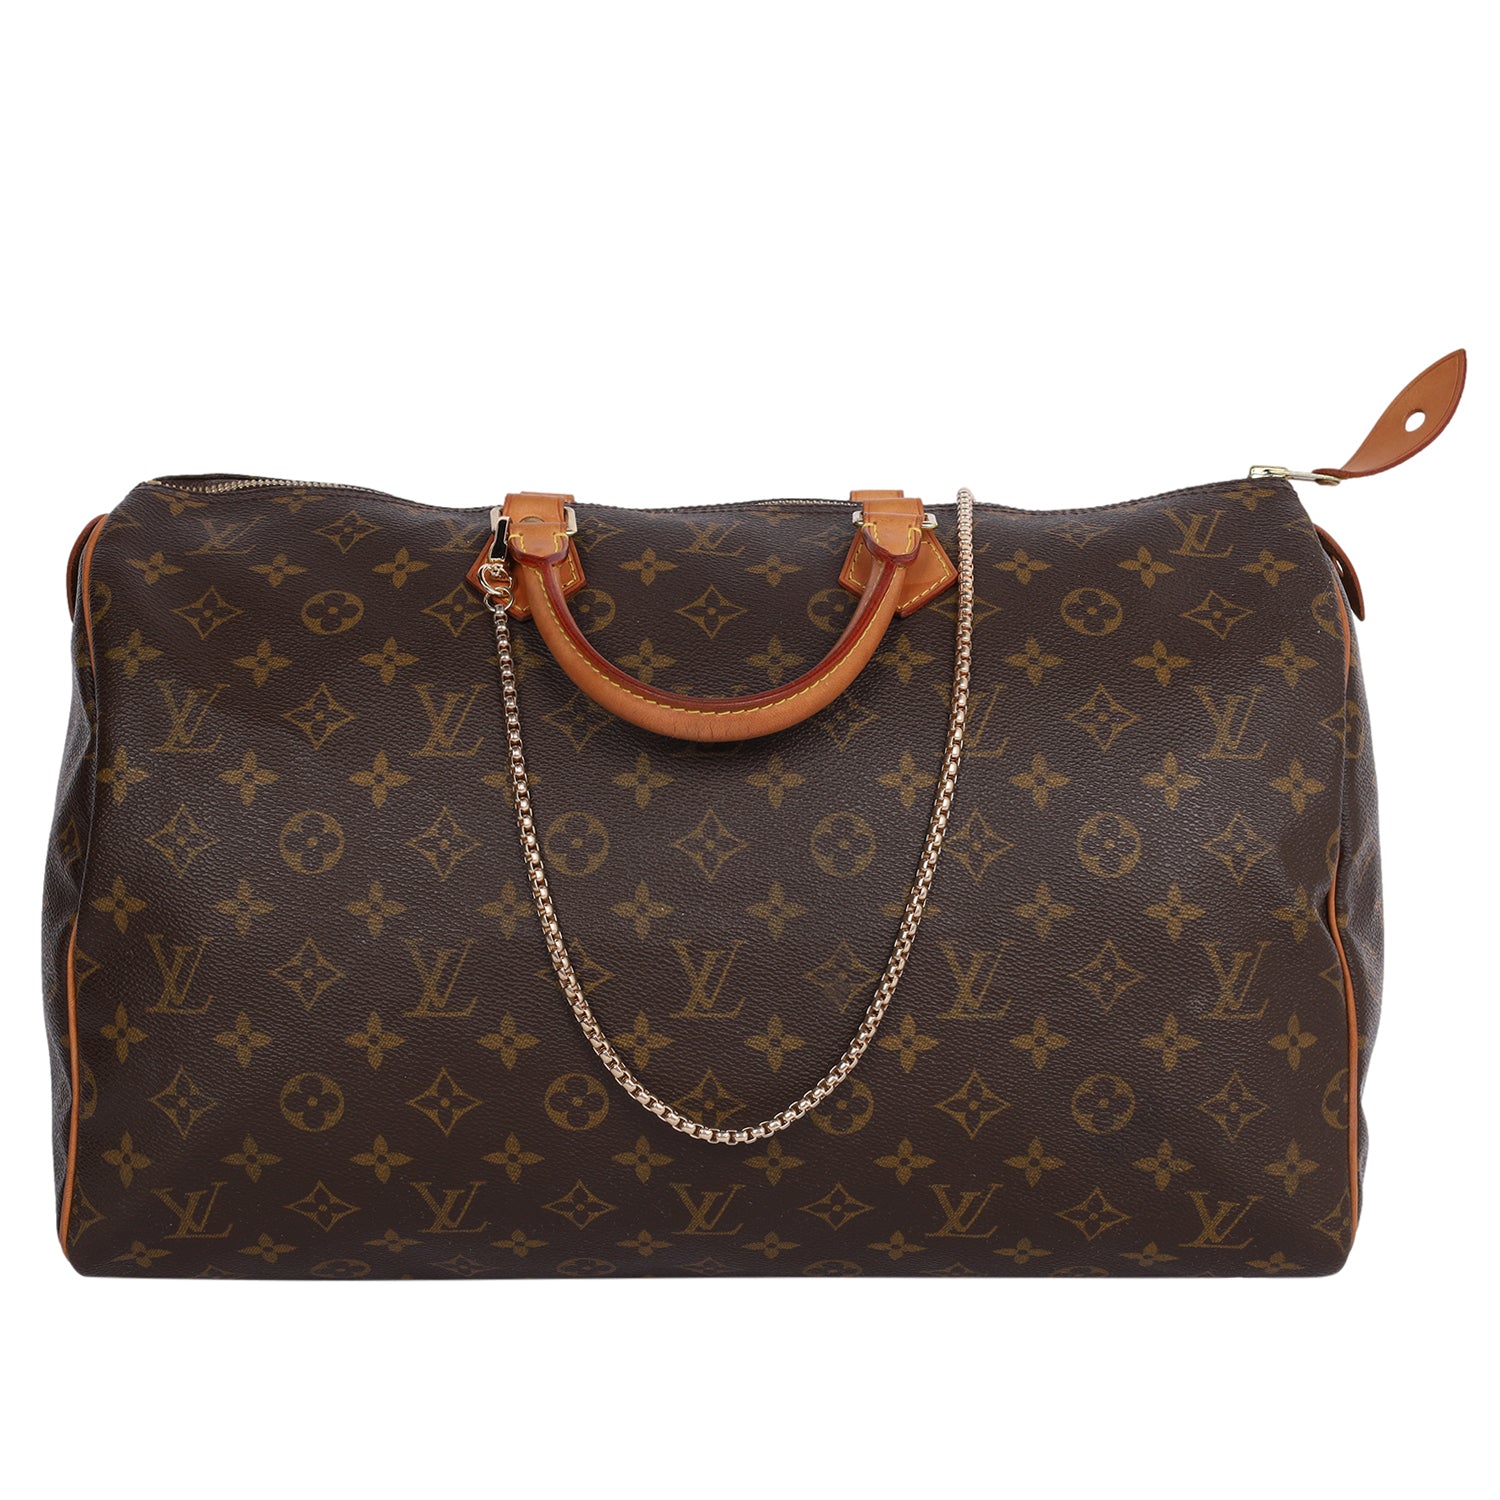 Louis Vuitton 1997 pre-owned Speedy 40 handbag - ShopStyle Shoulder Bags